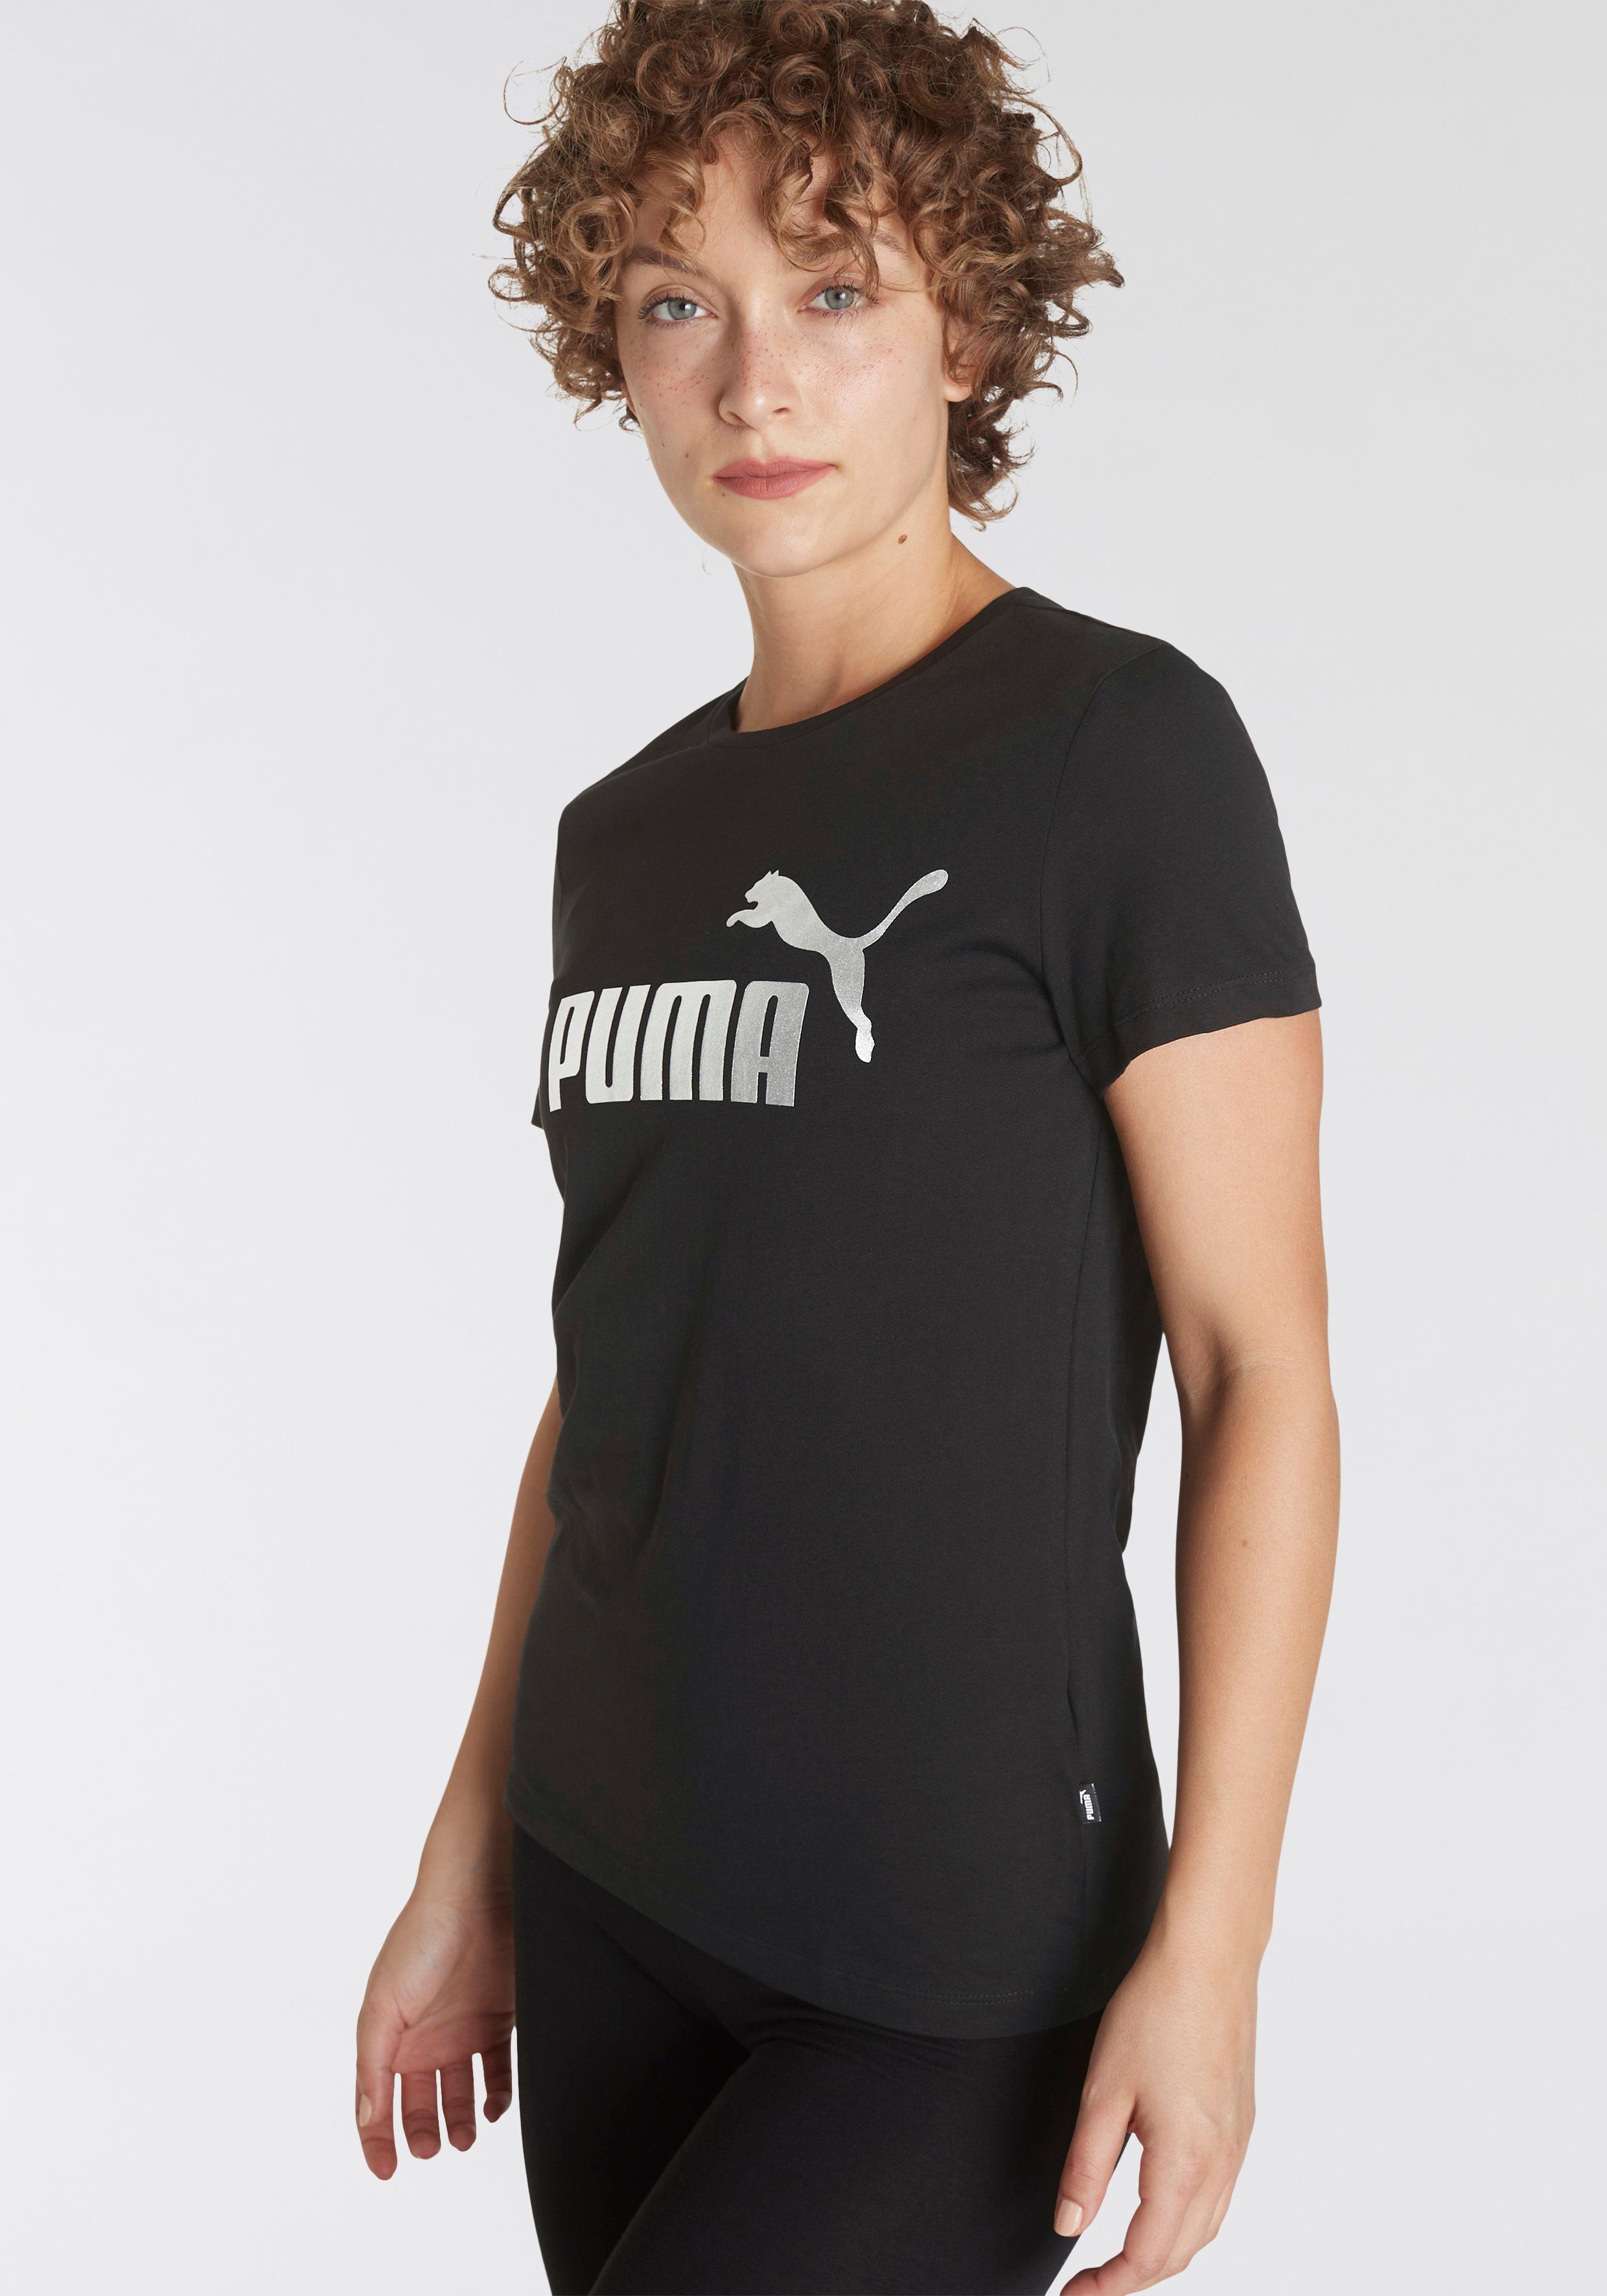 metallic TEE PUMA LOGO ESS+ Black-silver METALLIC Puma T-Shirt